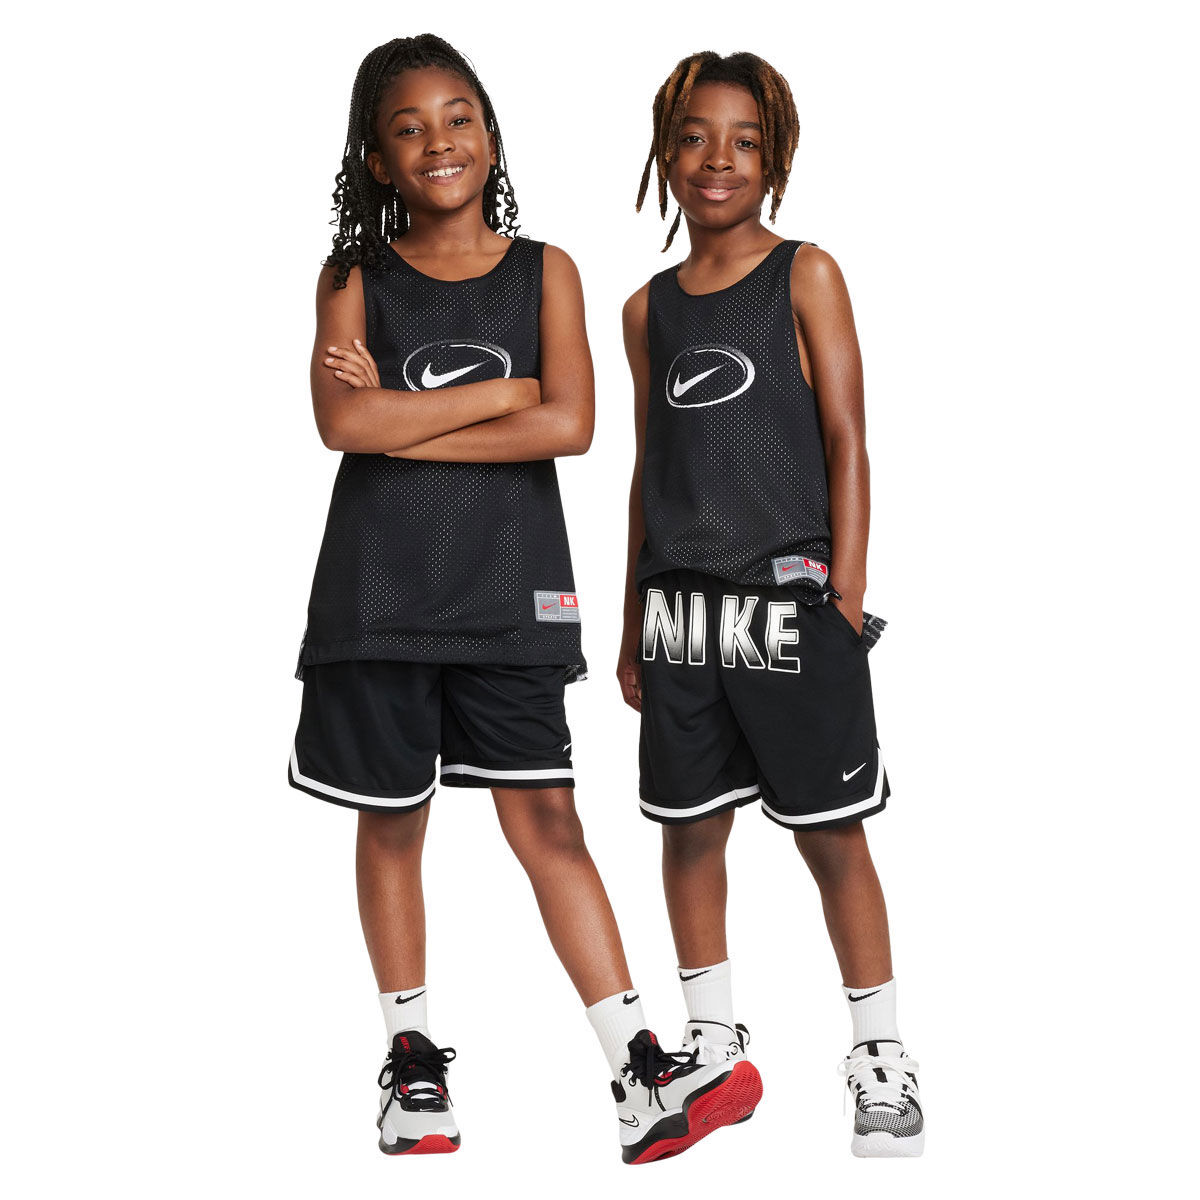 Nike Kids Culture of Basketball Dri-FIT DNA Shorts Black/White XL, Black/White, rebel_hi-res